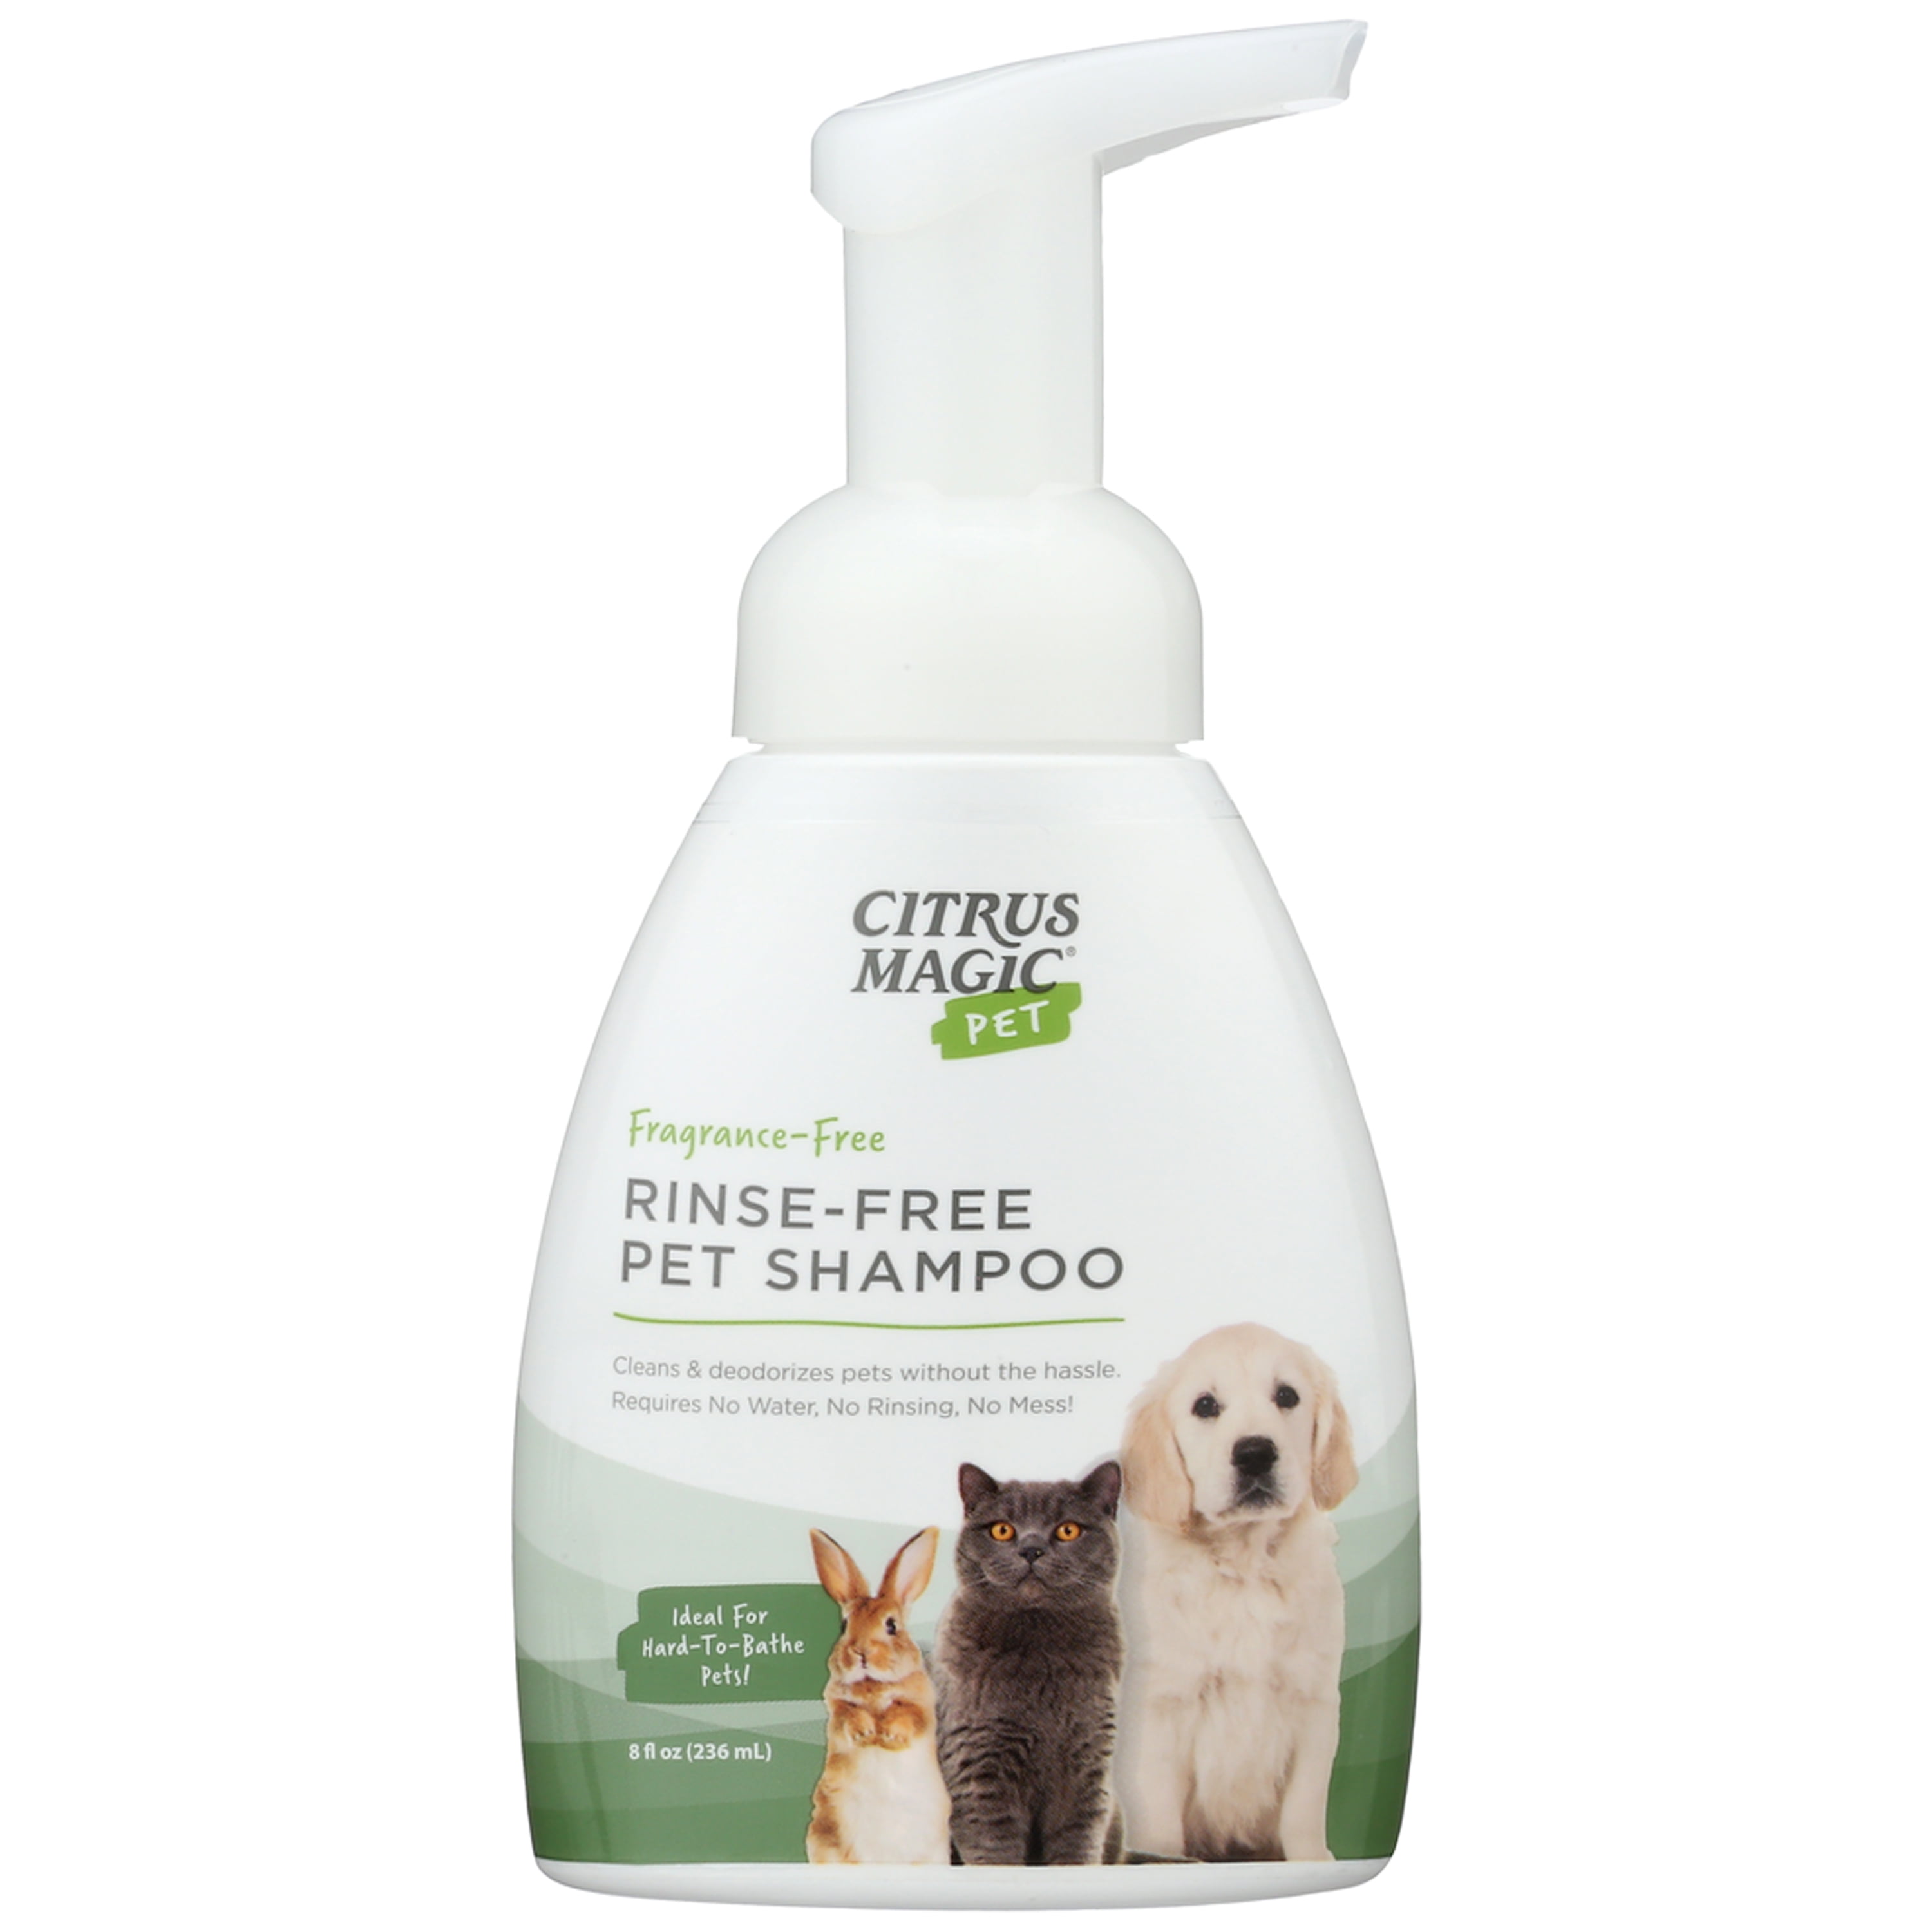 Citrus Magic Pet Rinse-Free Pet Shampoo, 8-Fluid Ounce